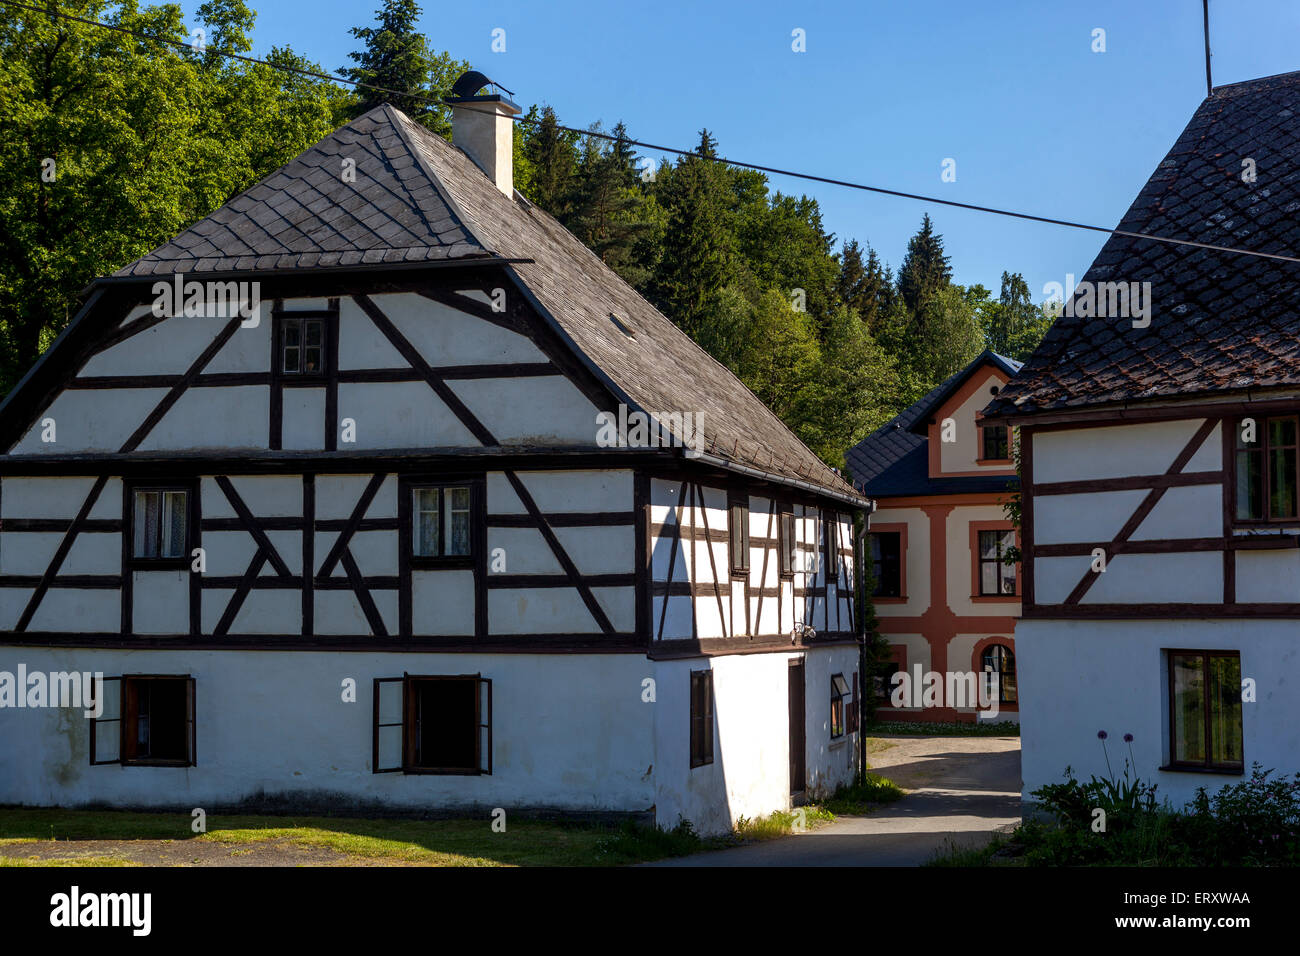 Czech Republic Utery, a small picturesque town, Plzen Region West Bohemia, Stock Photo